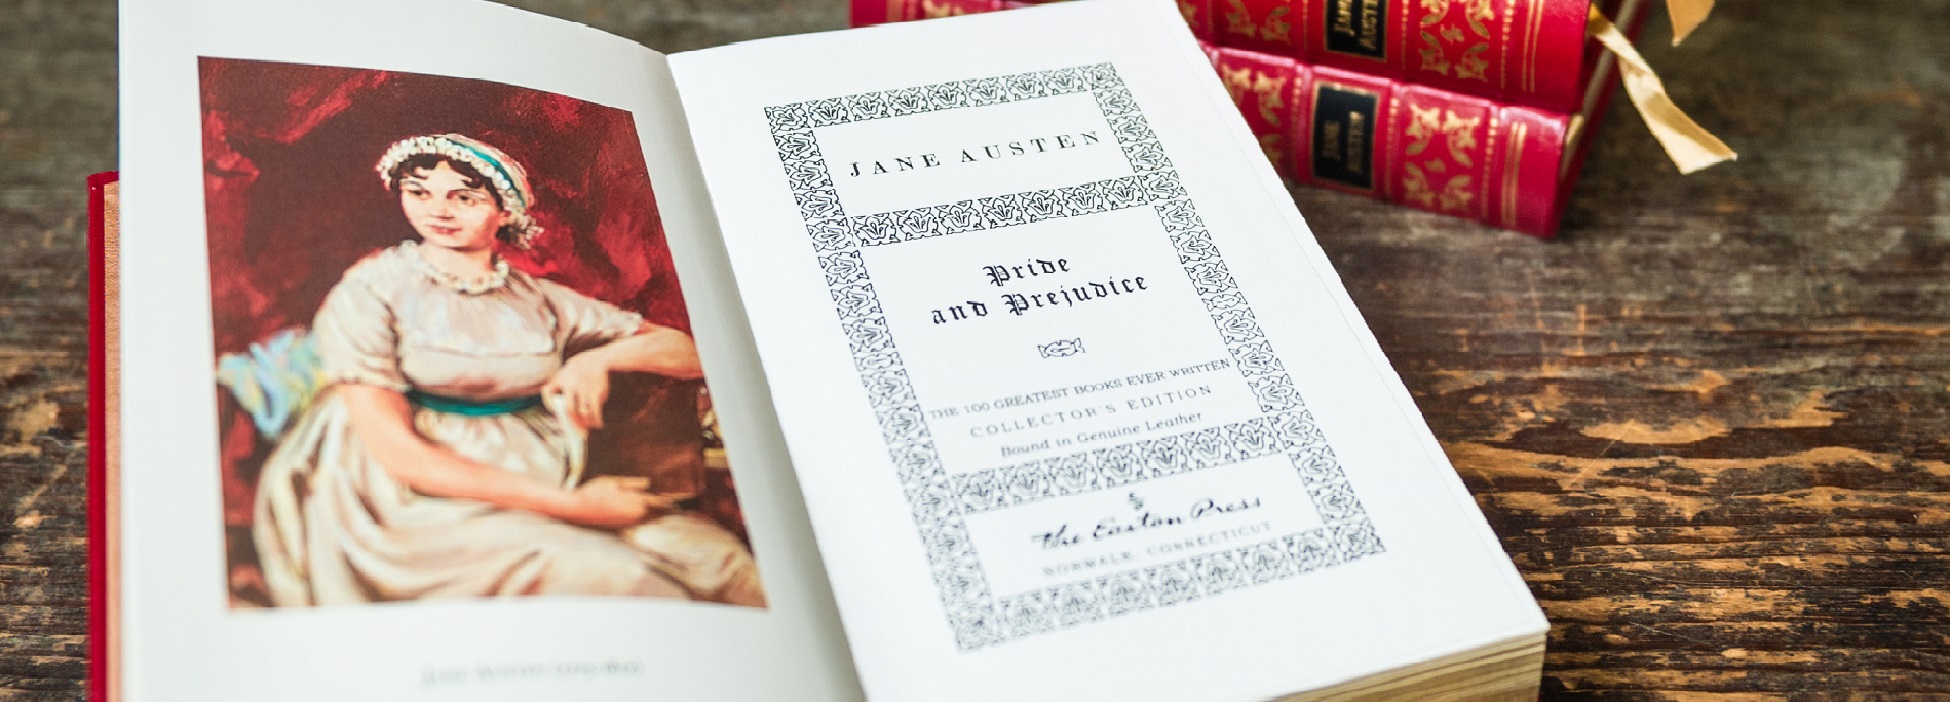 Jane Austen Bookclub Selwyn Communit Education